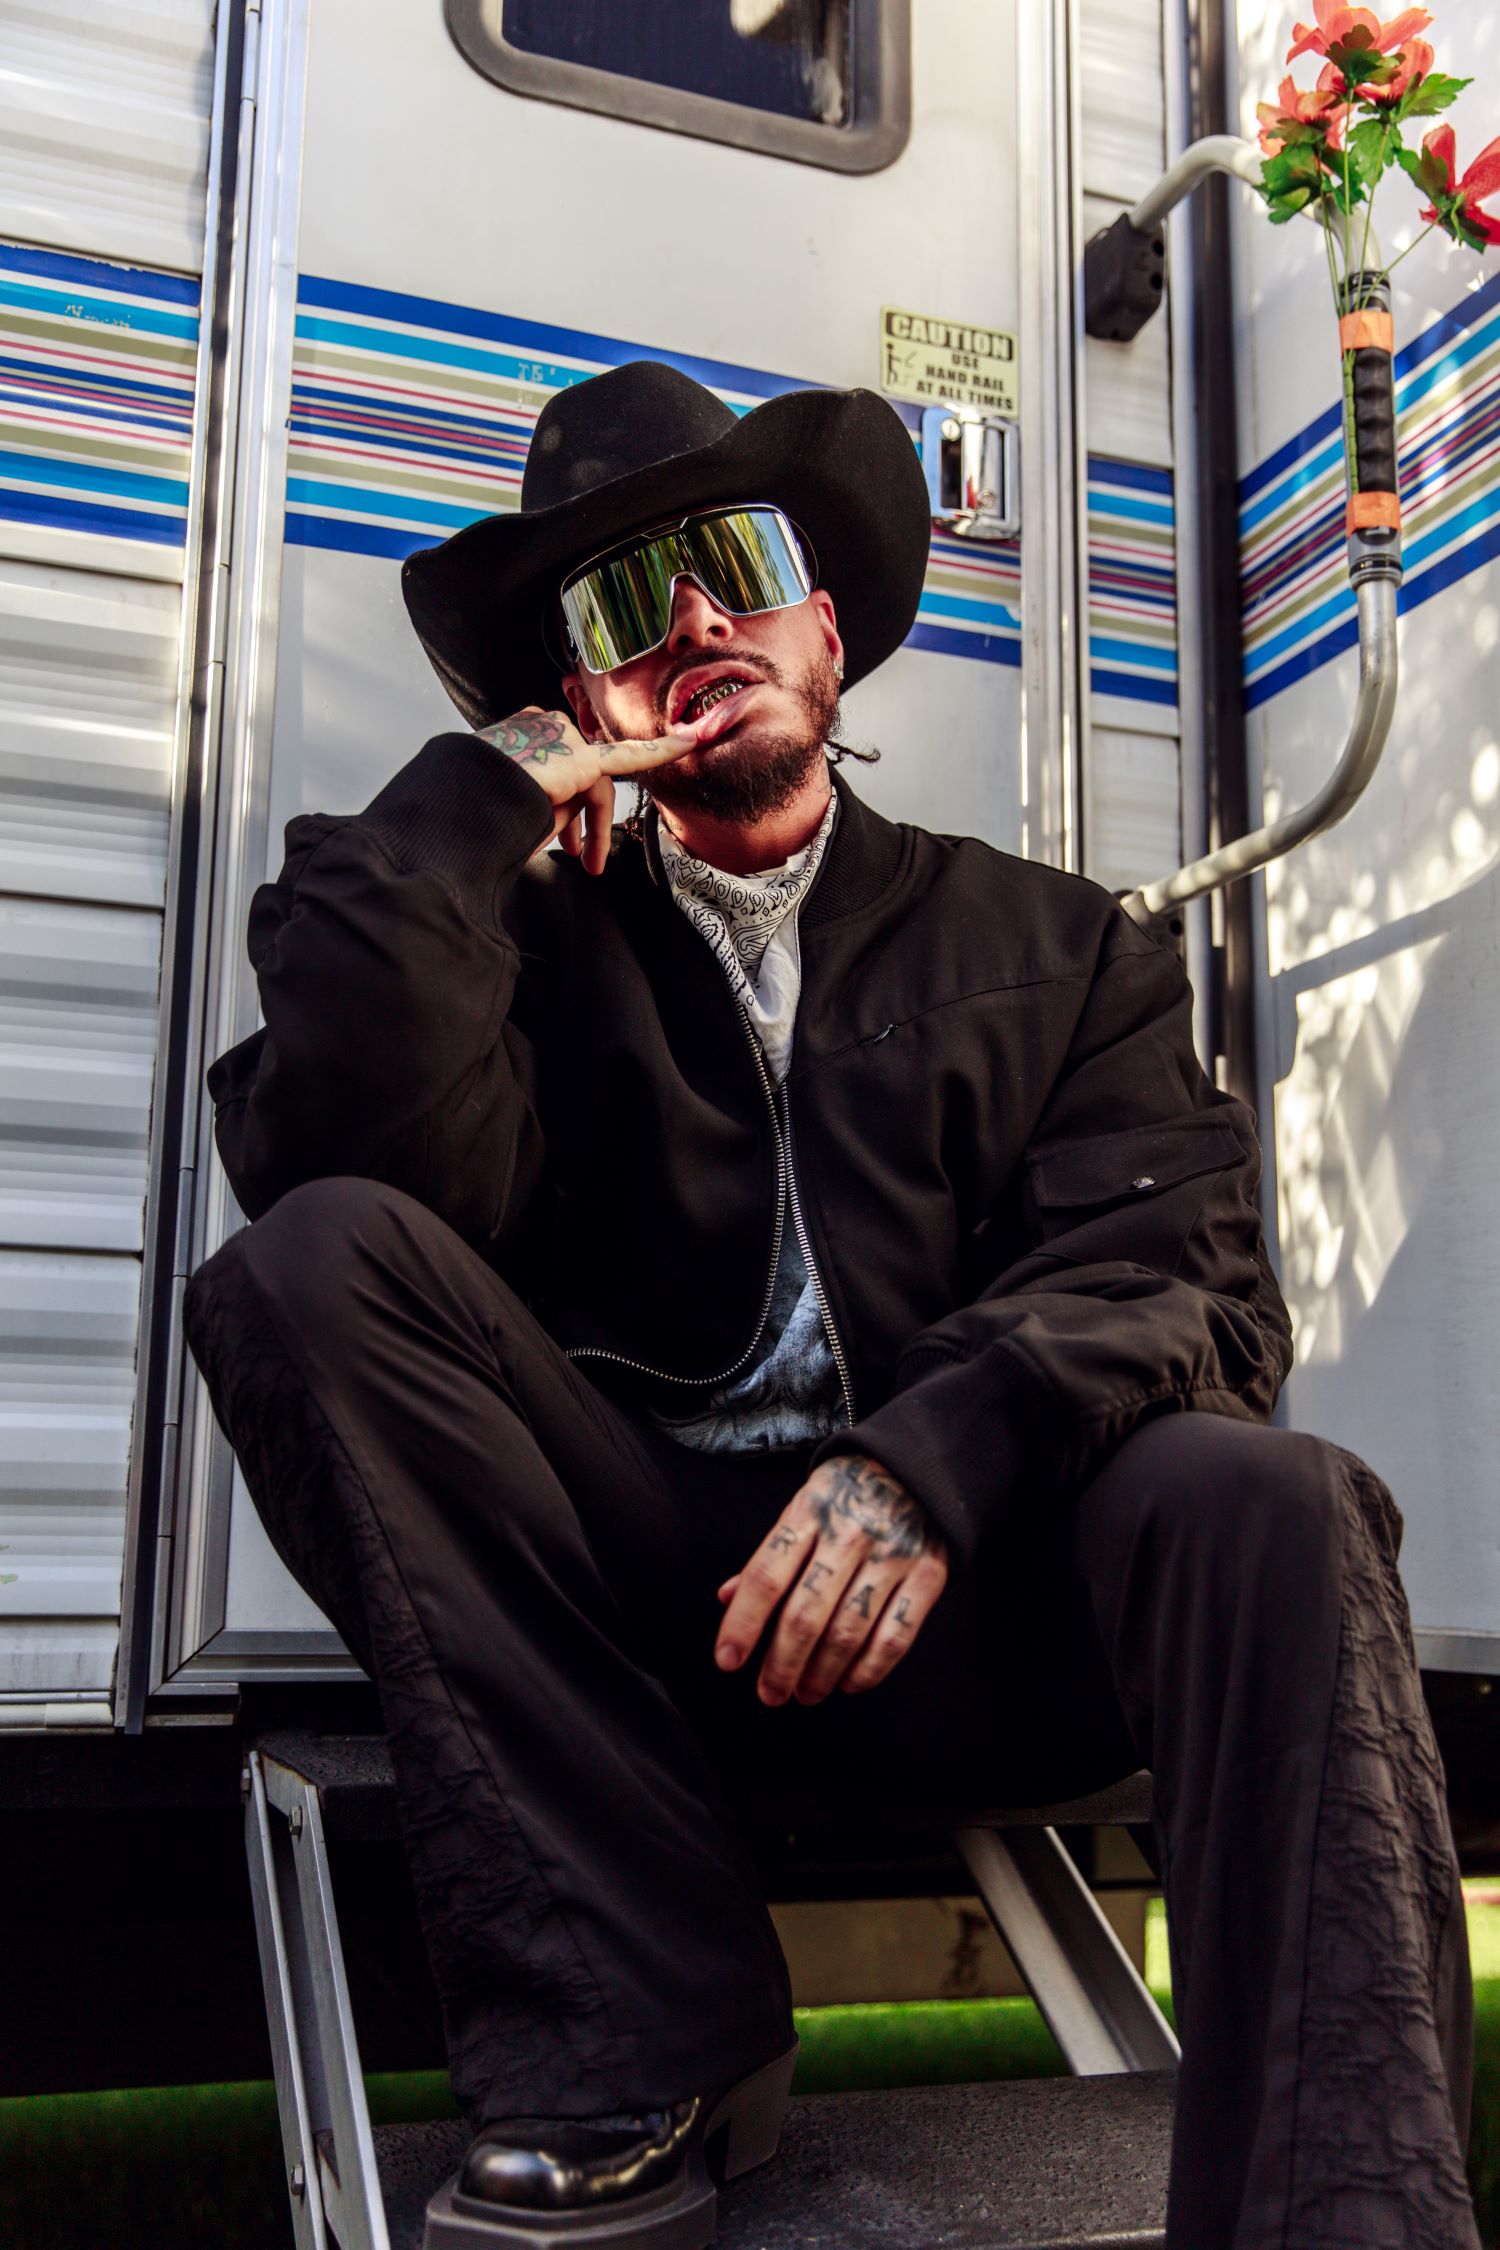 An image of J Balvin outside his trailer at Coachella.